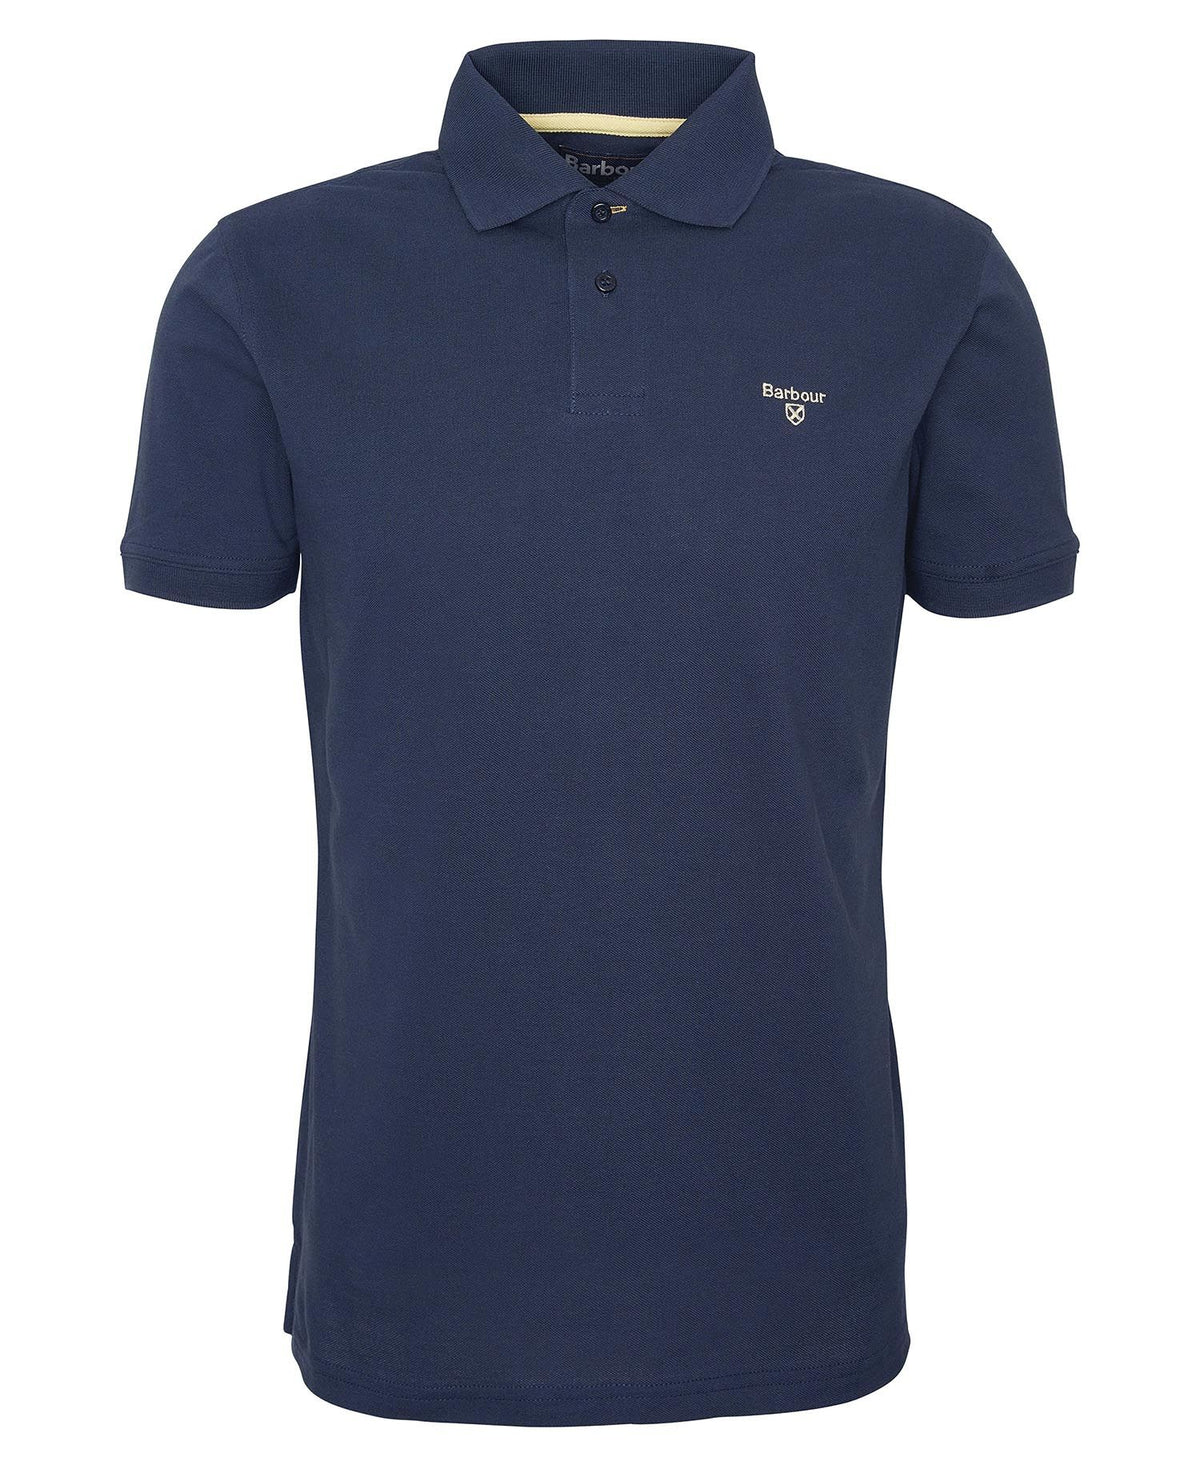 Barbour Men's light blue sports polo shirt